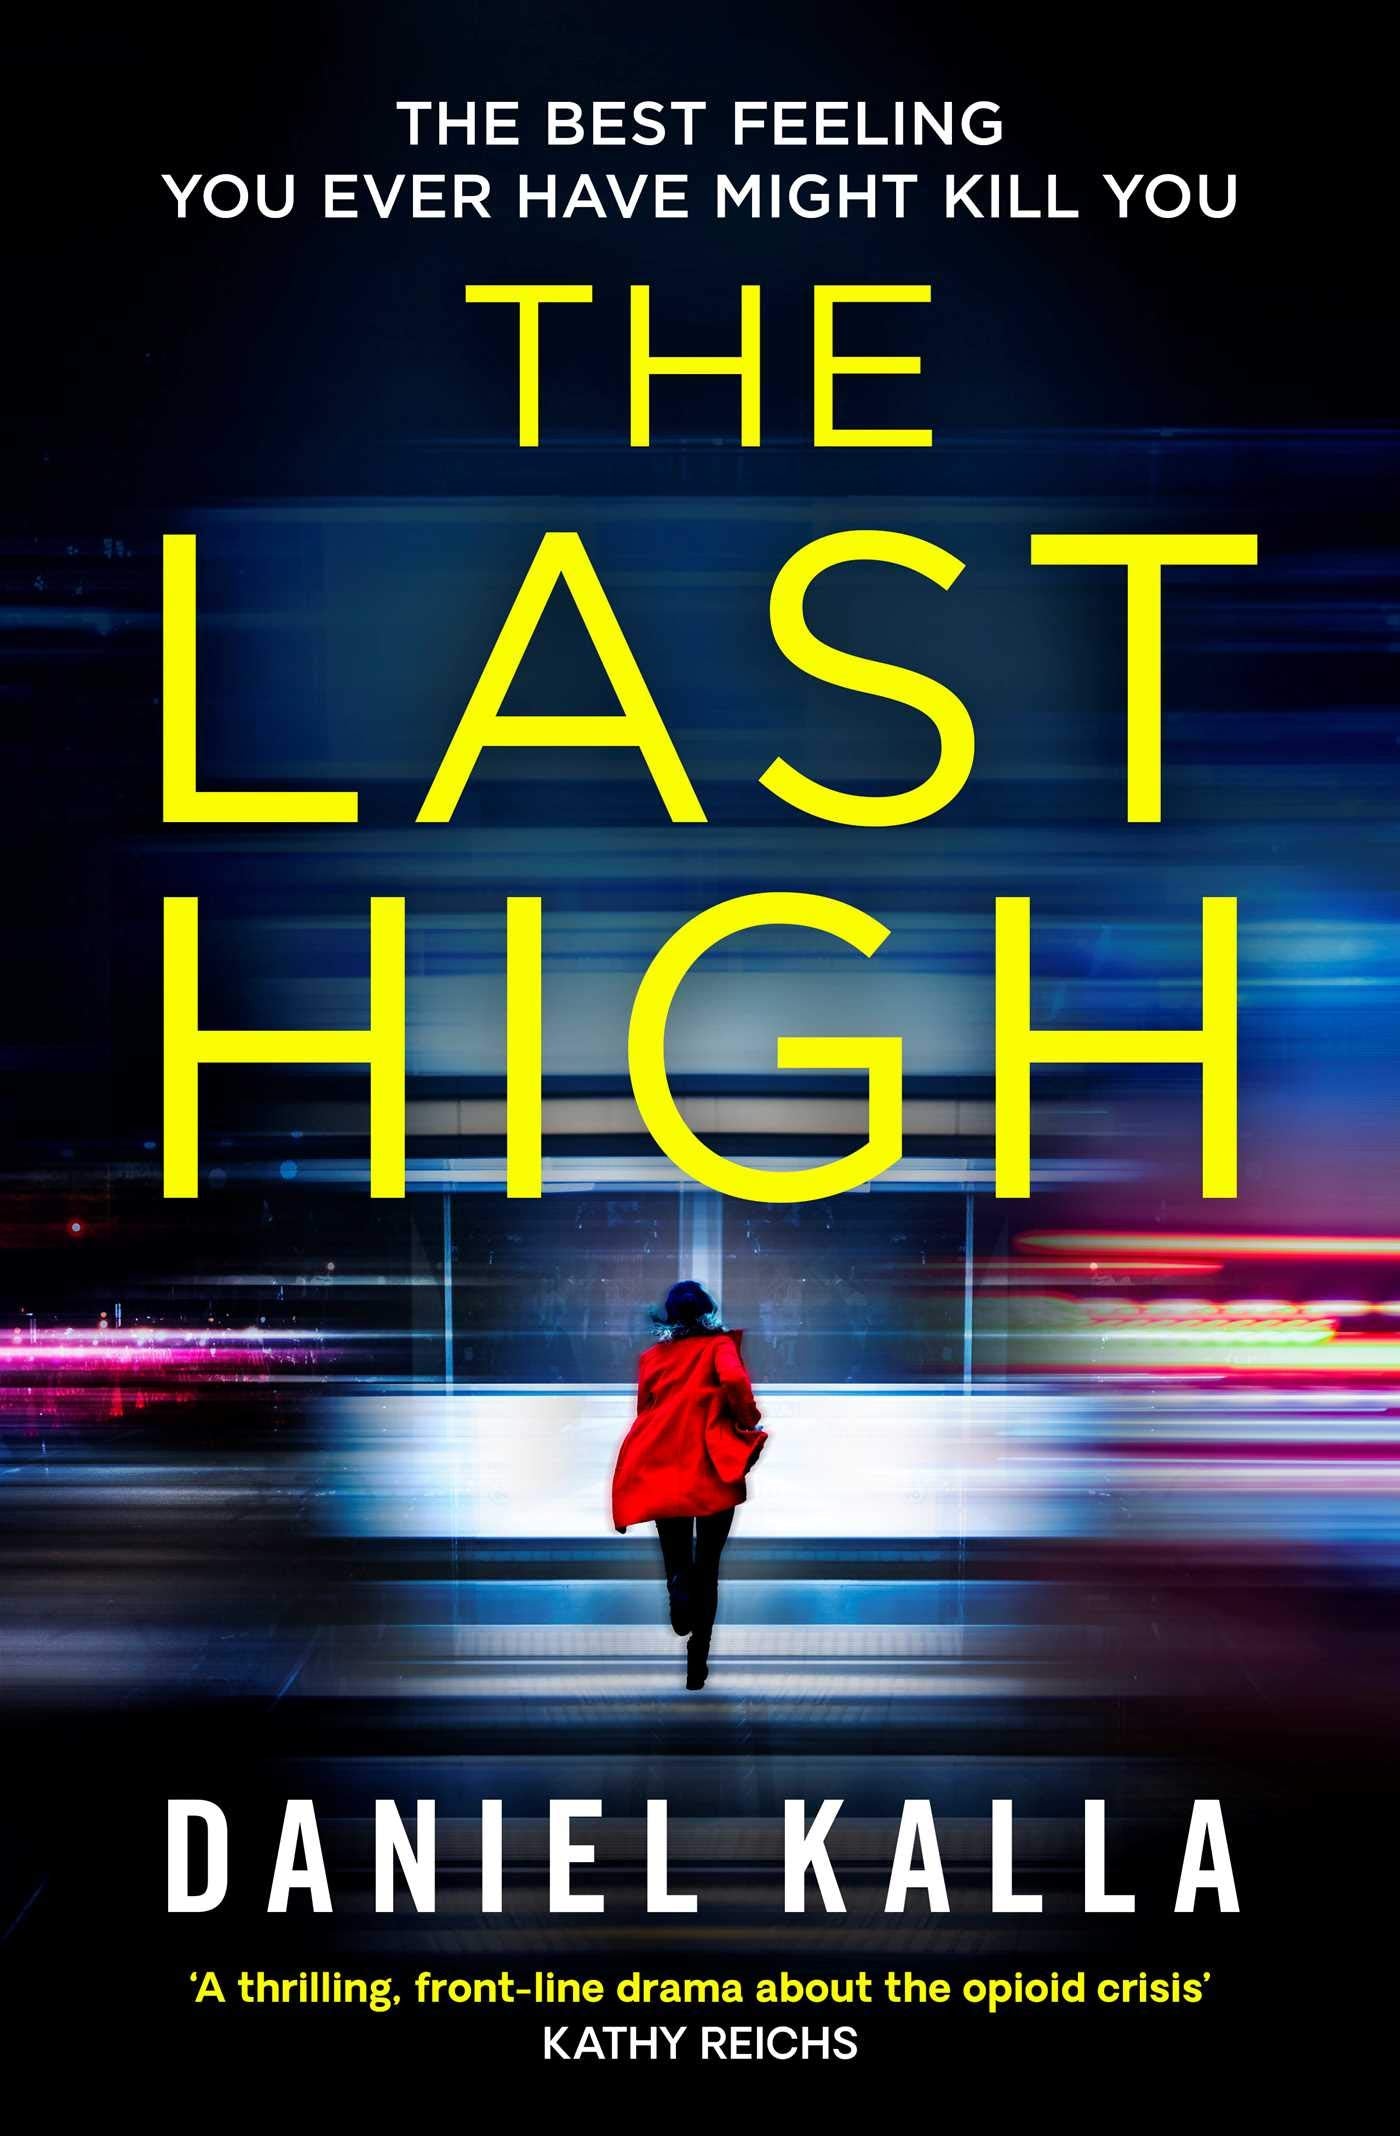 The Last High by Daniel Kalla